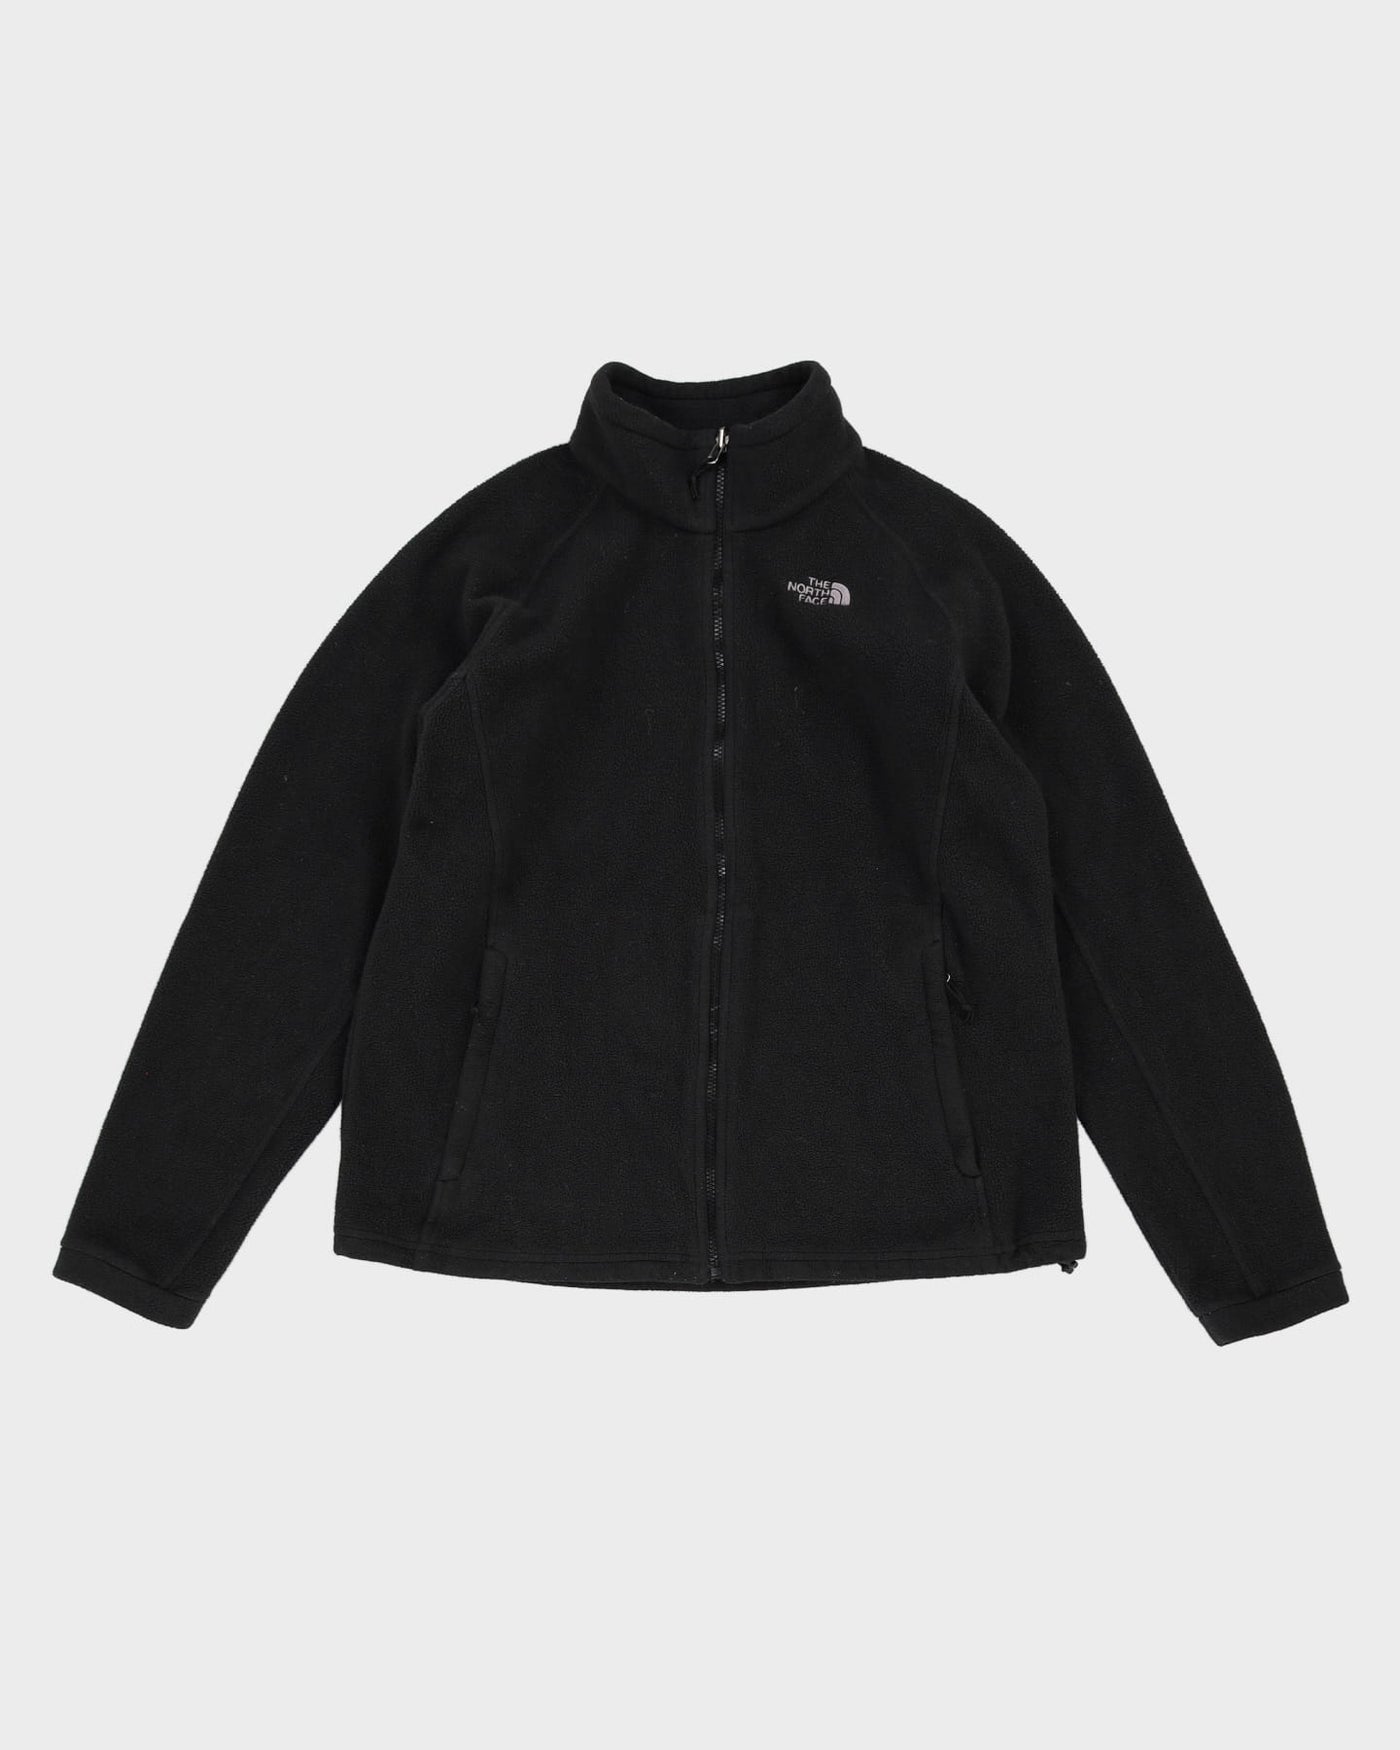 The North Face Black Full-Zip Fleece - XL